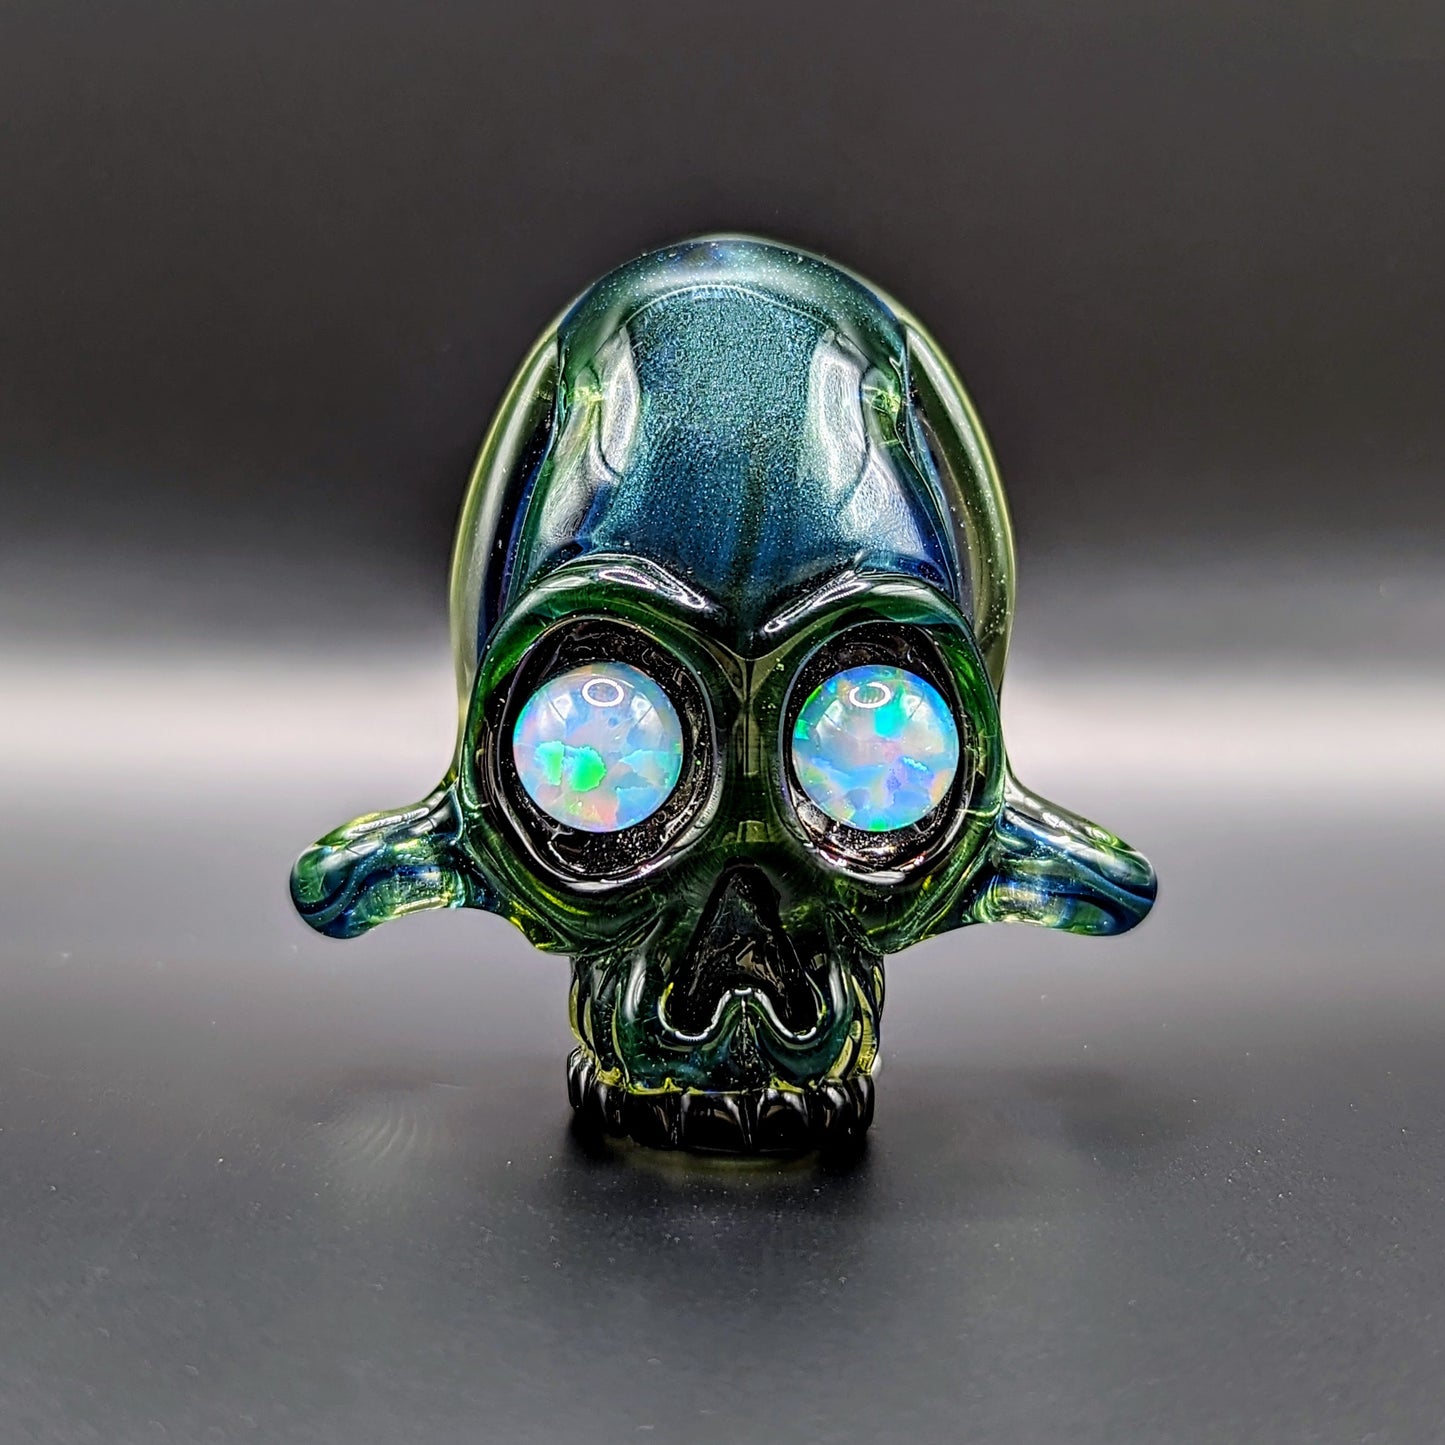 AKM  Skull, 2015 Illuminati Sleeved Borosilicate Glass Pendant with Opal Eyes Approx. 2.4 x 2.4 in  Hand blown glass made by AKM. Signed "AKM" + Dated "2015"